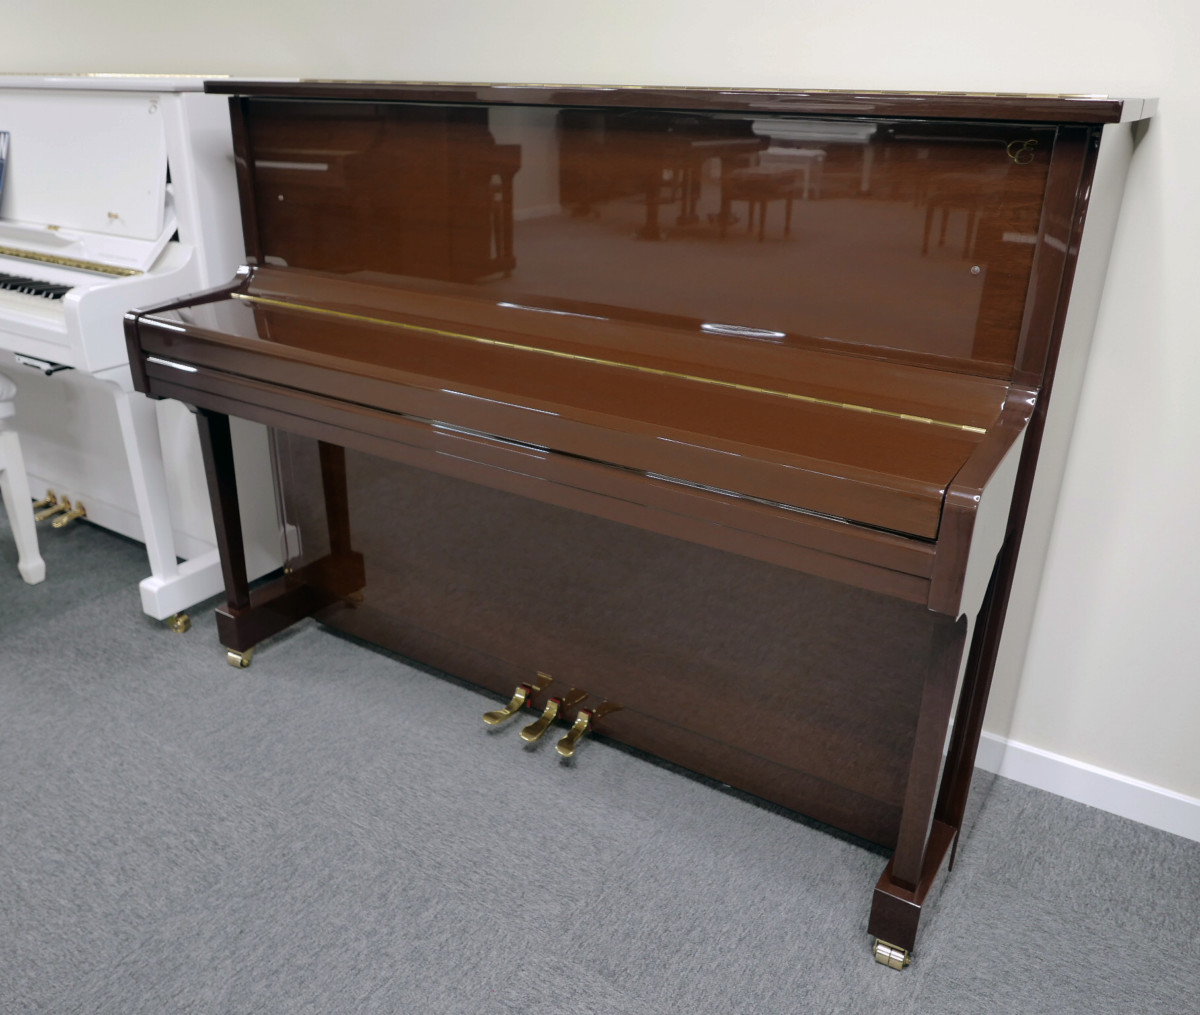 piano vertical Essex EUP116 caoba #172689 outlet vista general tapa cerrada